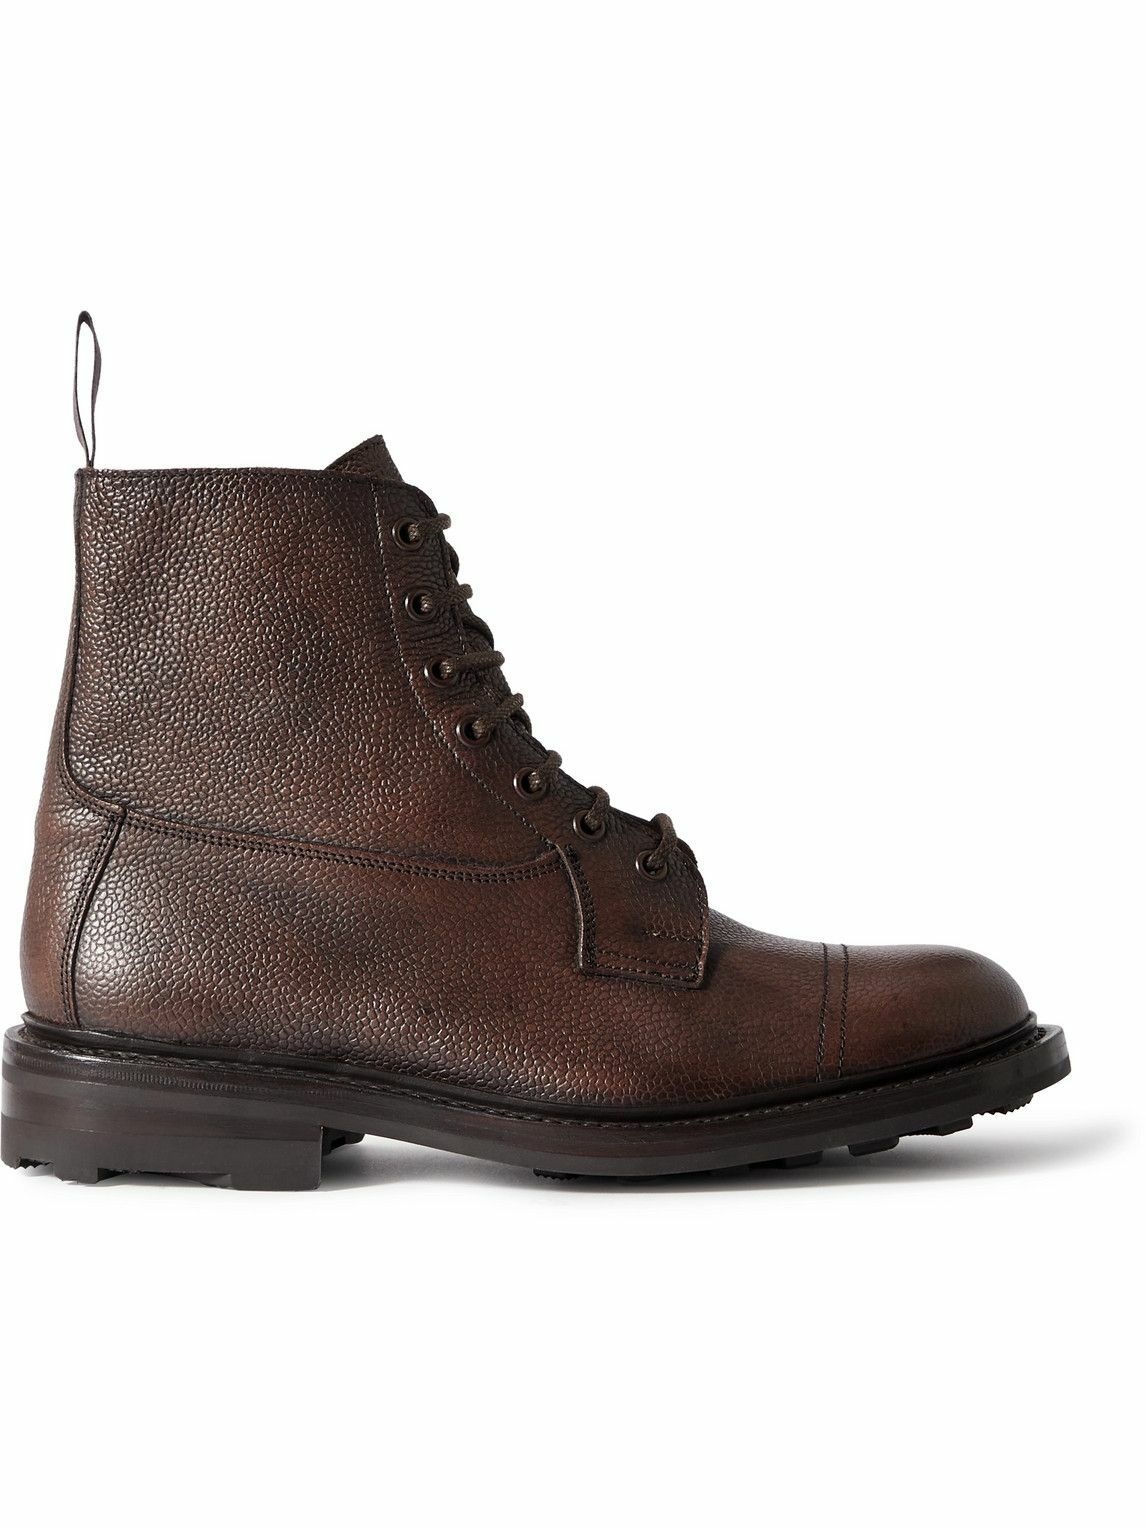 Photo: Tricker's - Grassmere Scotchgrain Leather Boots - Brown